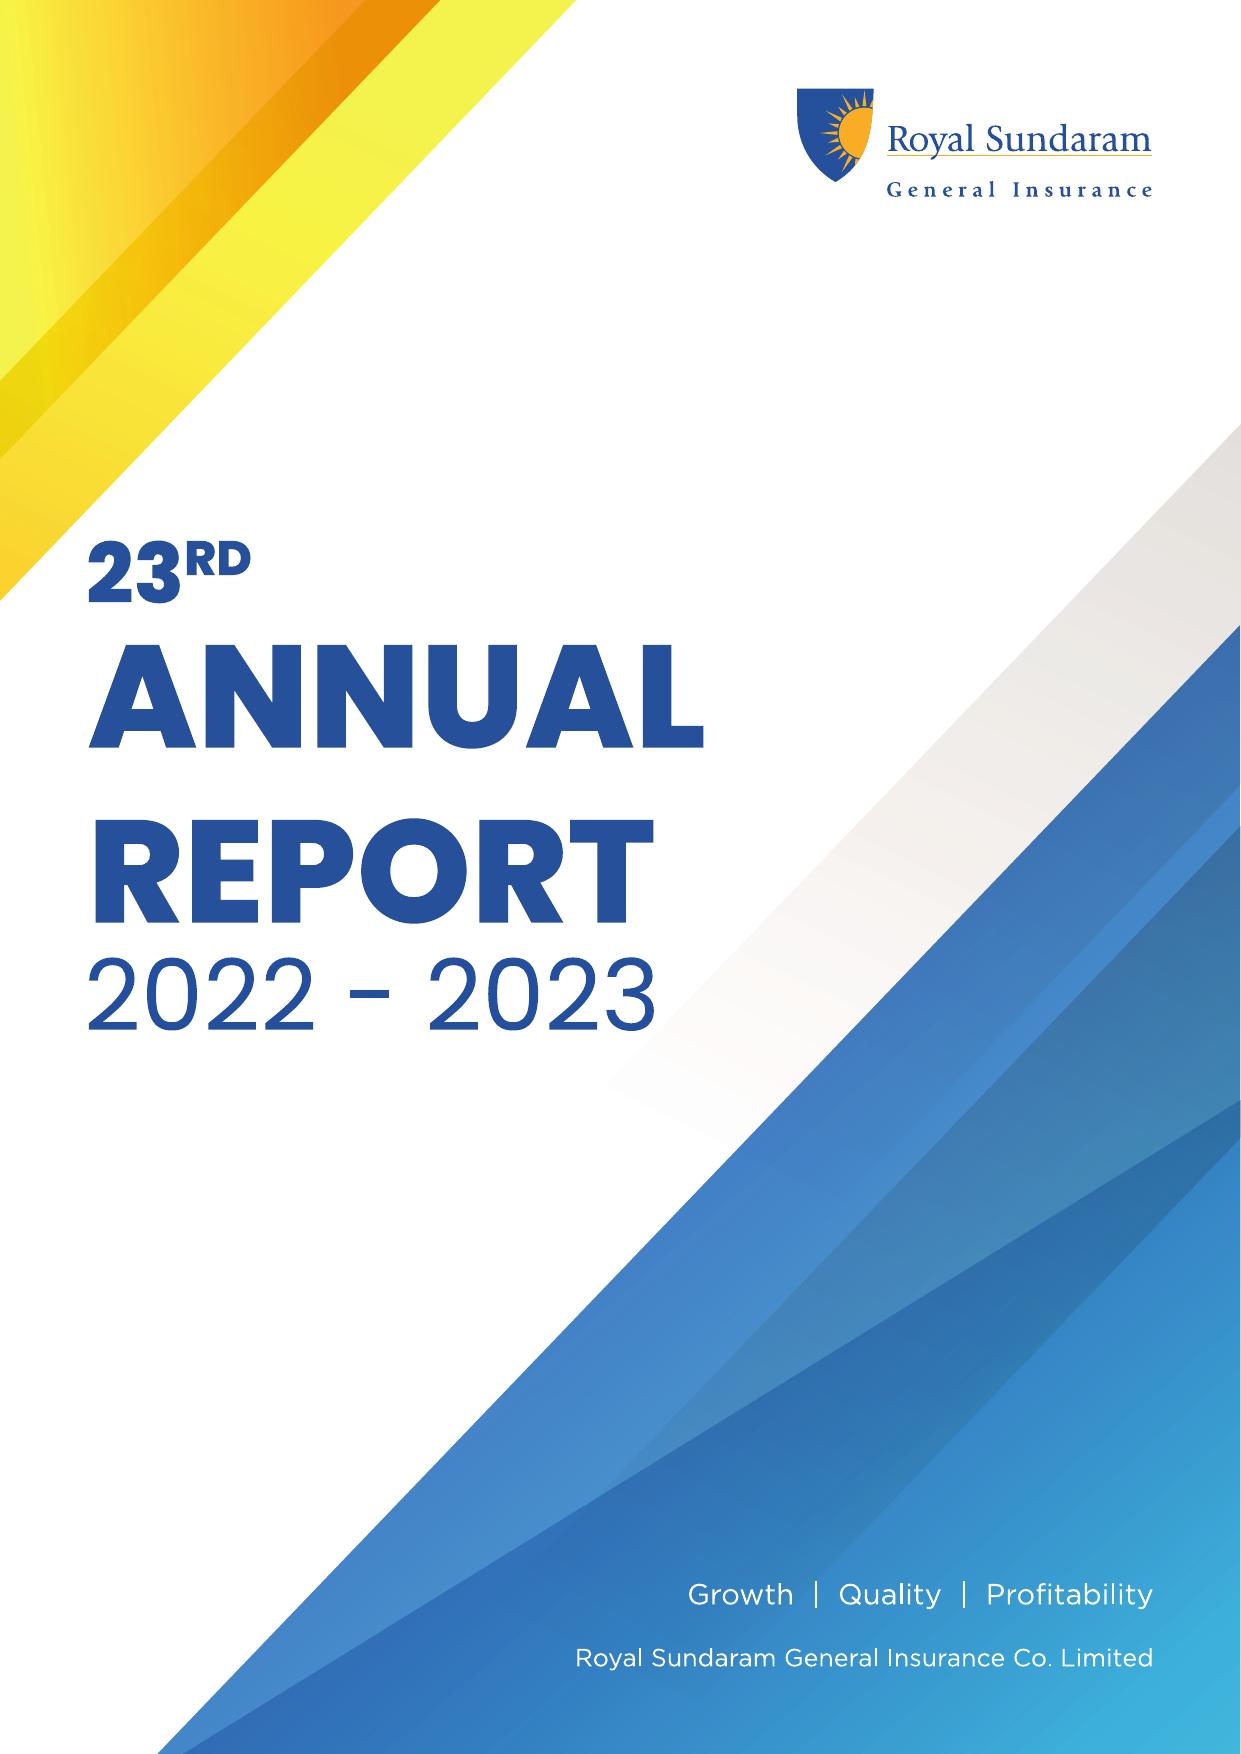 ROYALSUNDARAM 2022 Annual Report